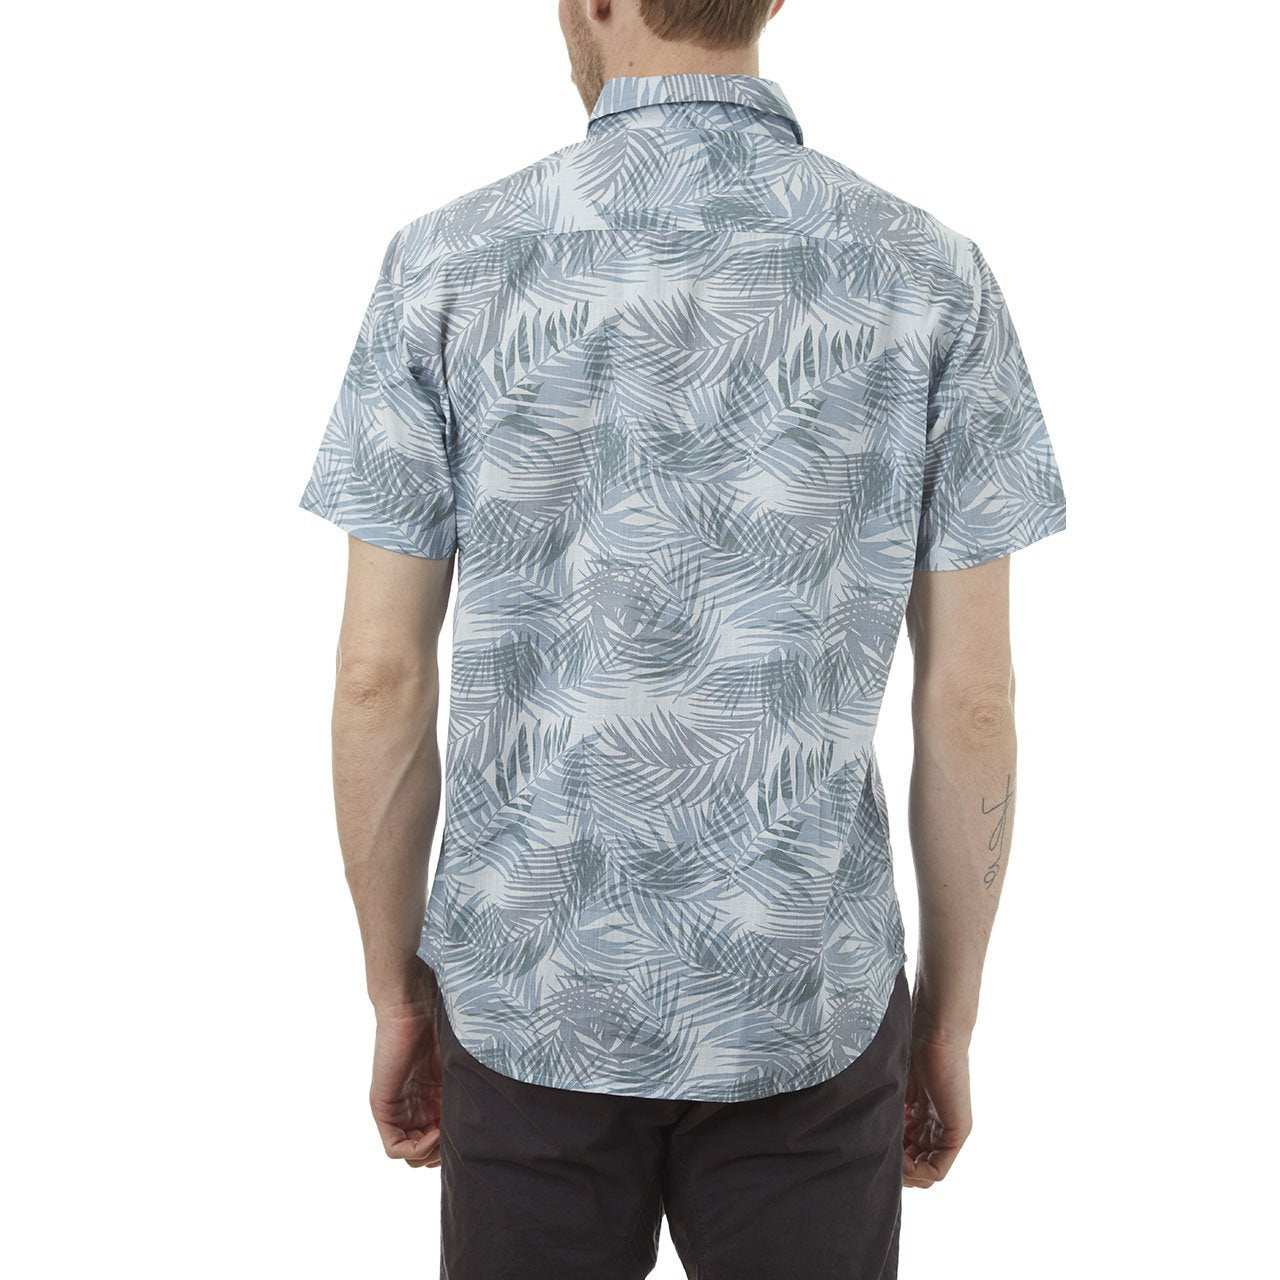 Picture of a Men's Light Blue Hawaiian Shirt back view